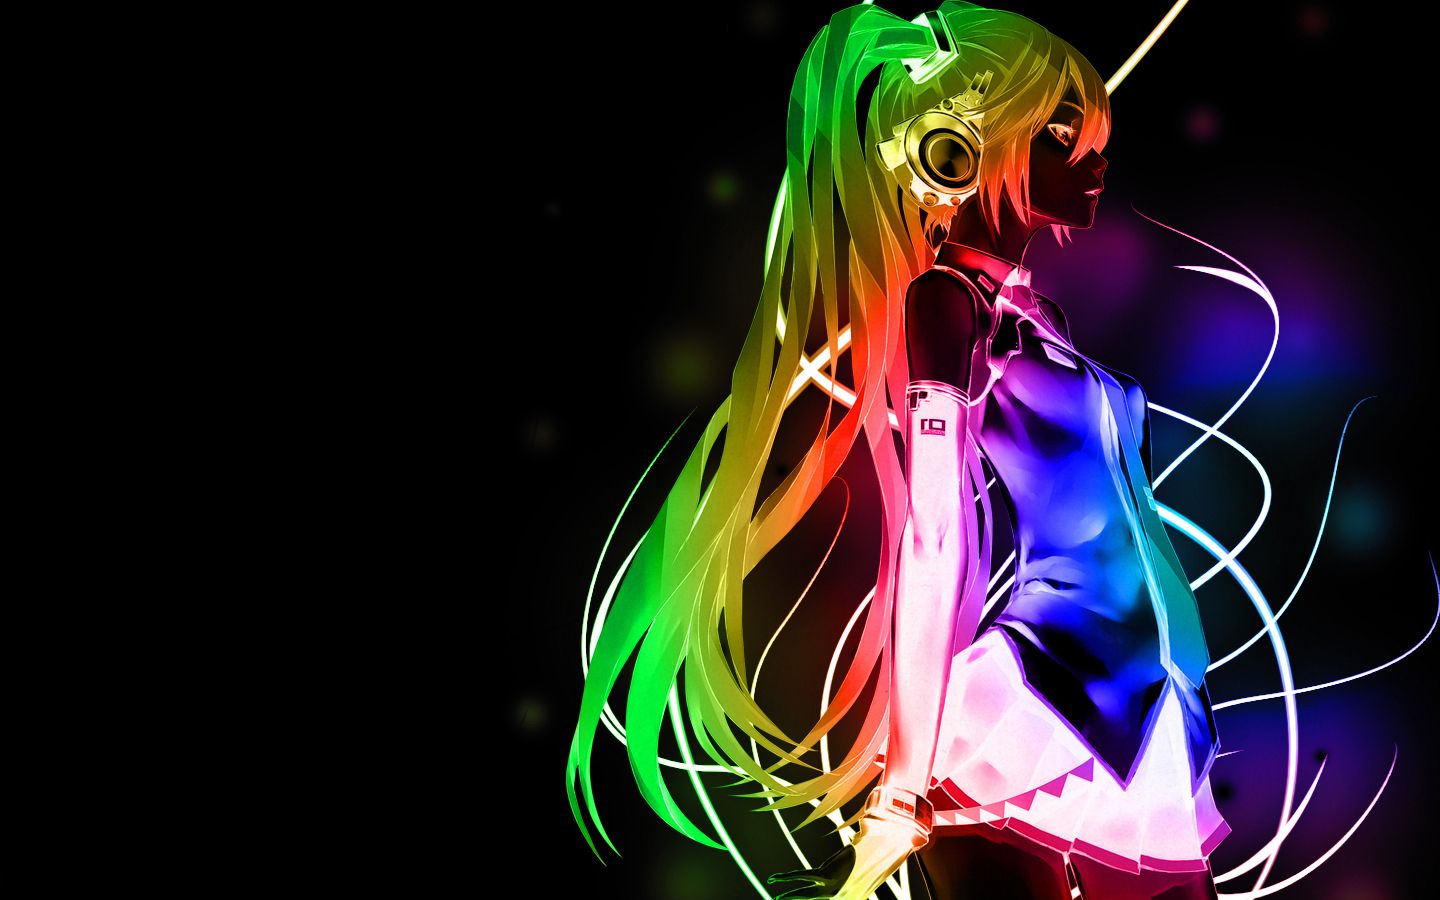 Rainbow - Other & Anime Background Wallpapers on Desktop Nexus (Image  610470)